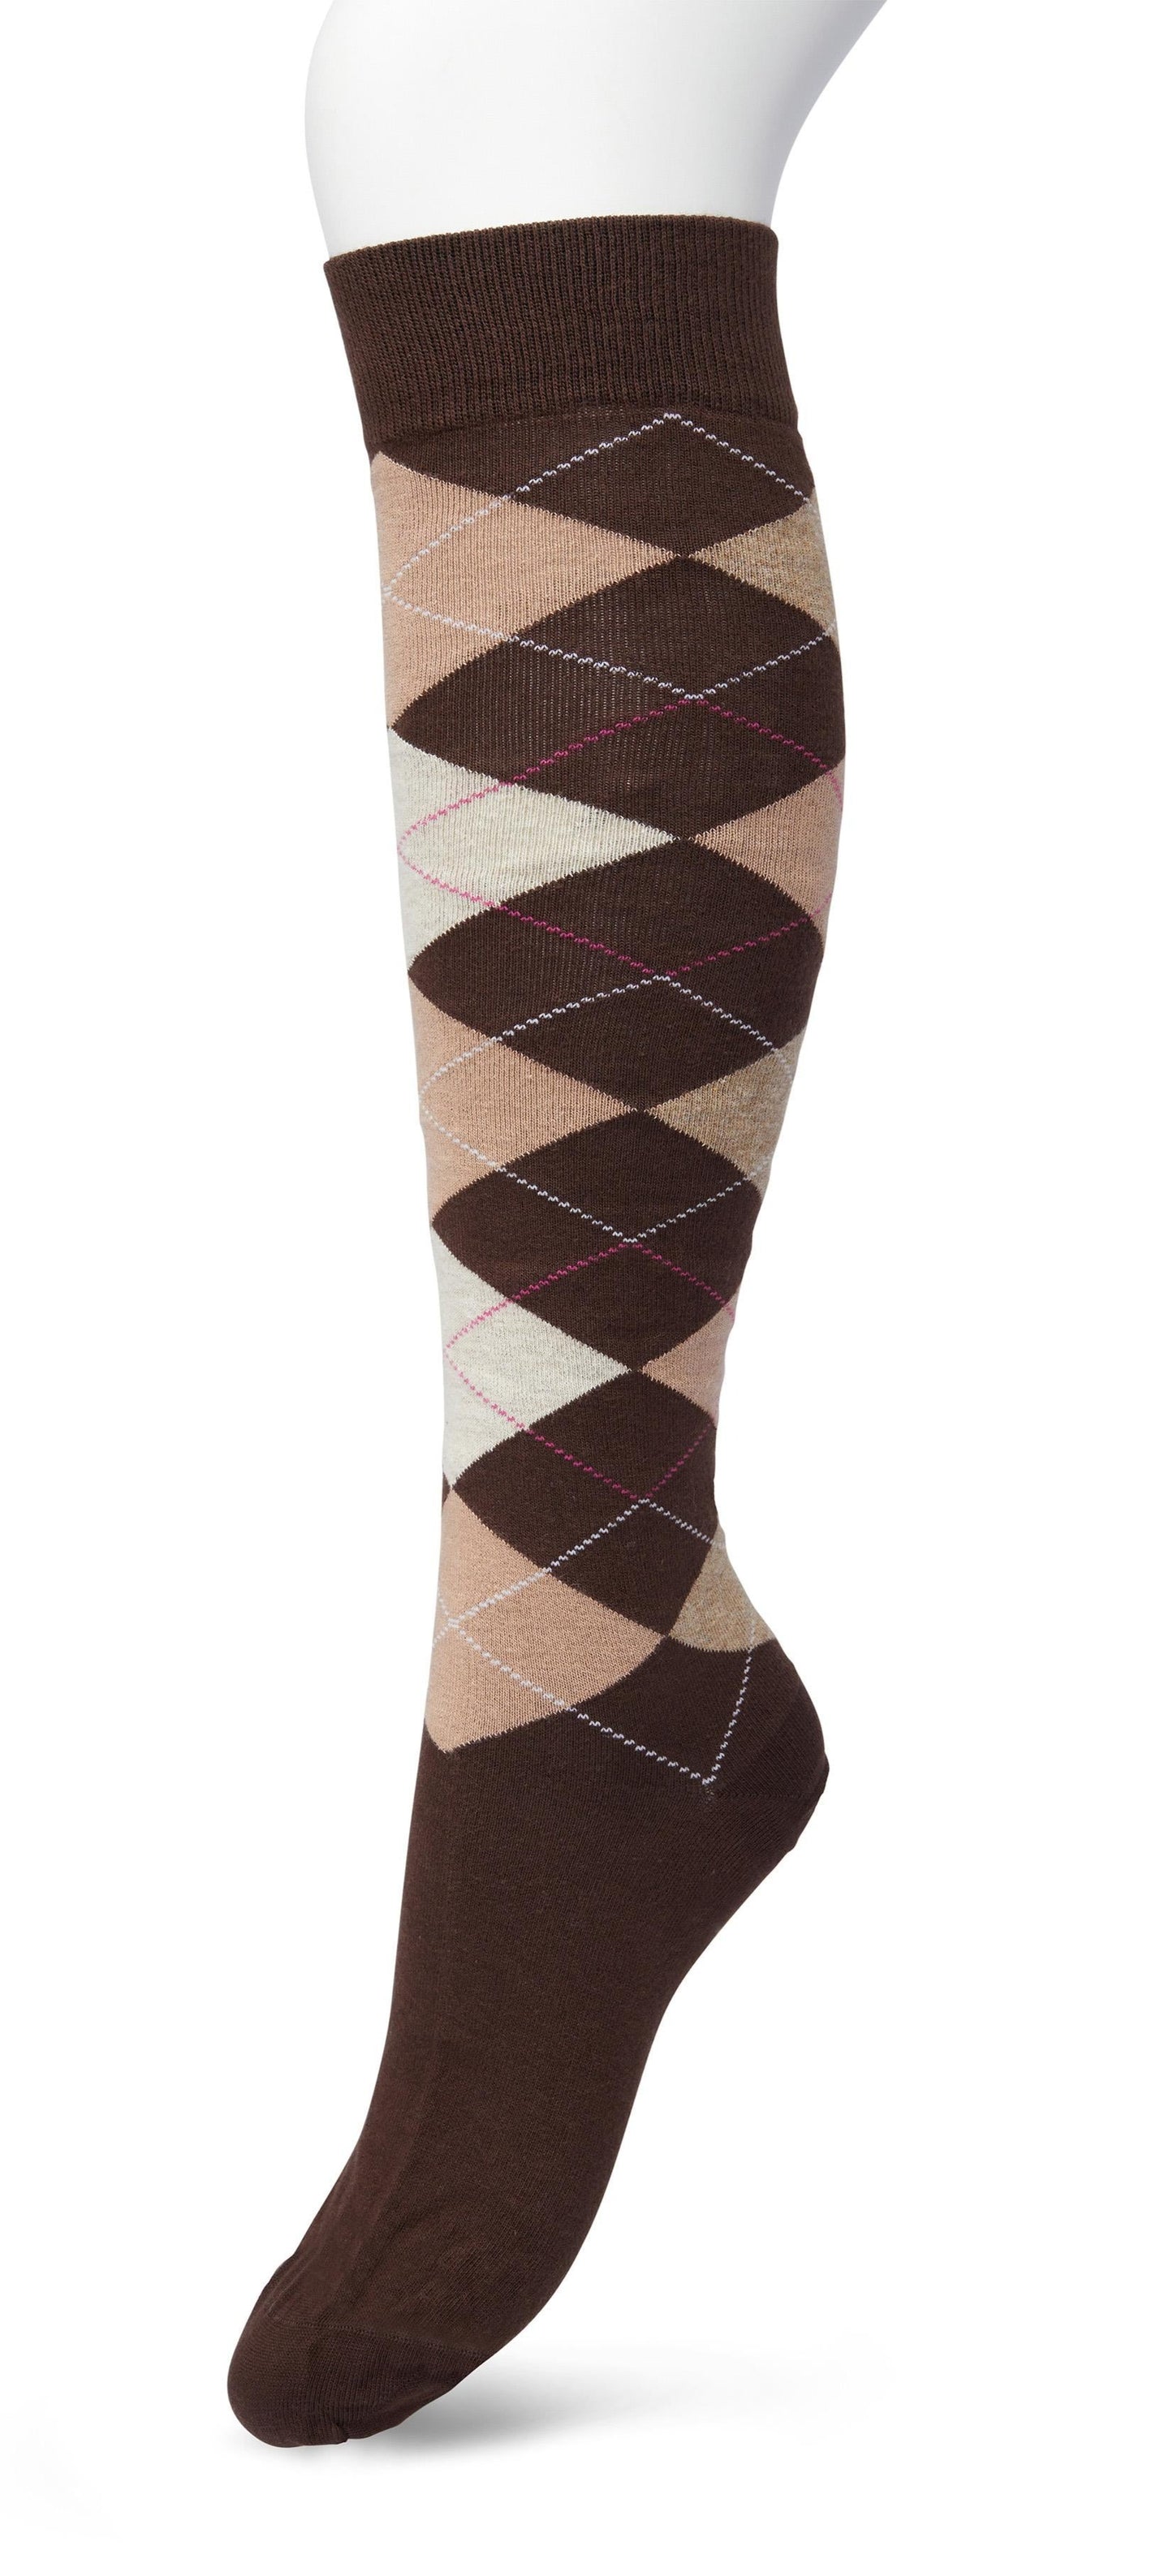 Bonnie Doon BP211505 Argyle Knee-highs - Golf style knee-high socks with a diamond argyle tartan check pattern in light beige, brown, cream oat and pink.